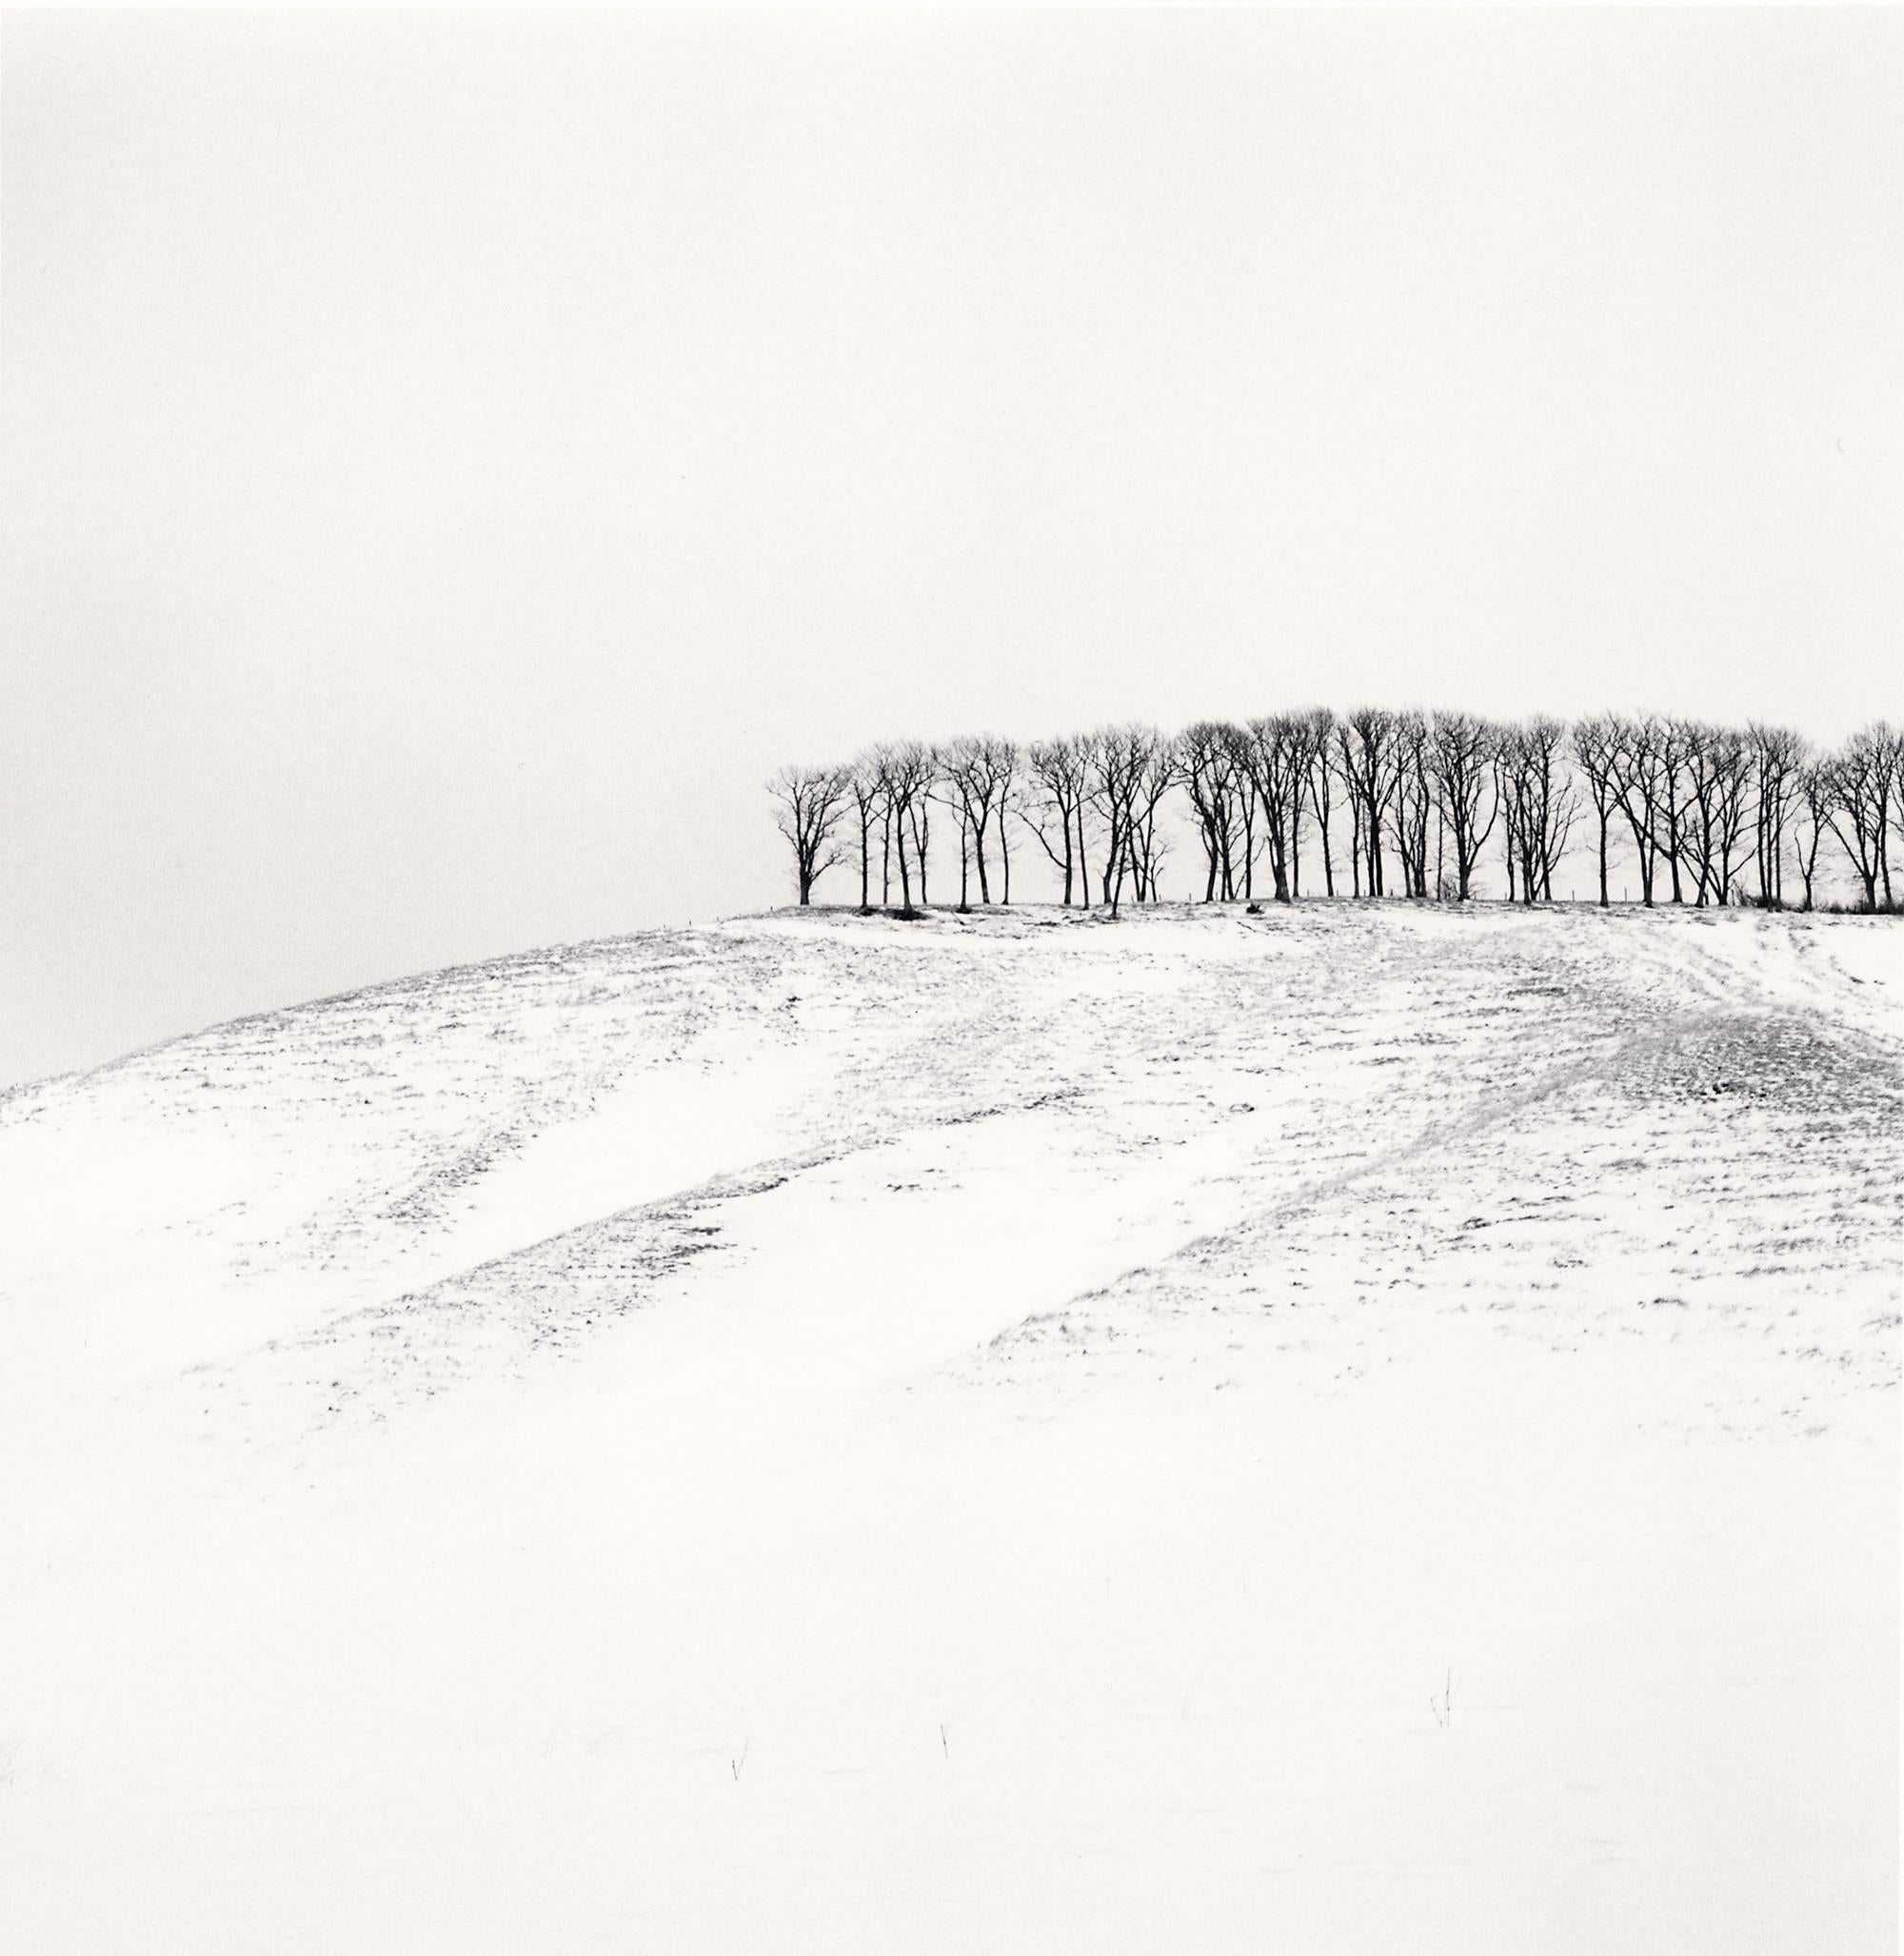 Michael Kenna Landscape Photograph – Hilltop Trees, Studie 4, Teshikaga, Hokkaido, Japan. 2016